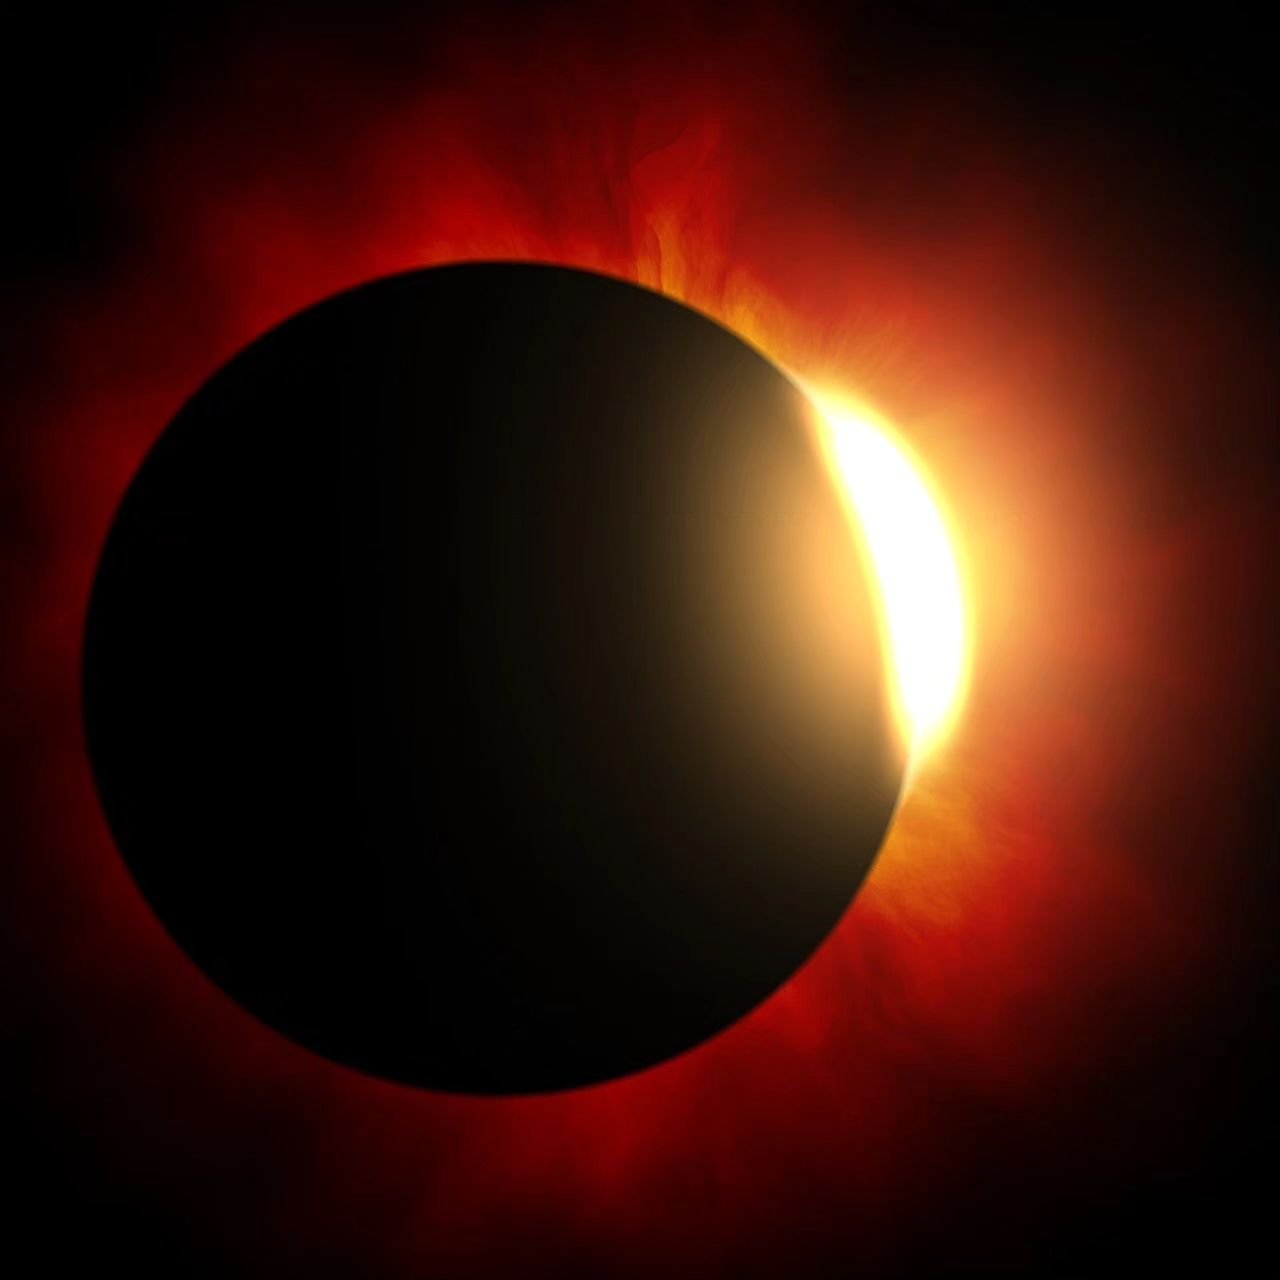 Happy Solar Eclipse Day 2024!
We'll be back open tomorrow when the sun comes back out!
#solareclipseinnorthcarolina
#solareclipse2024